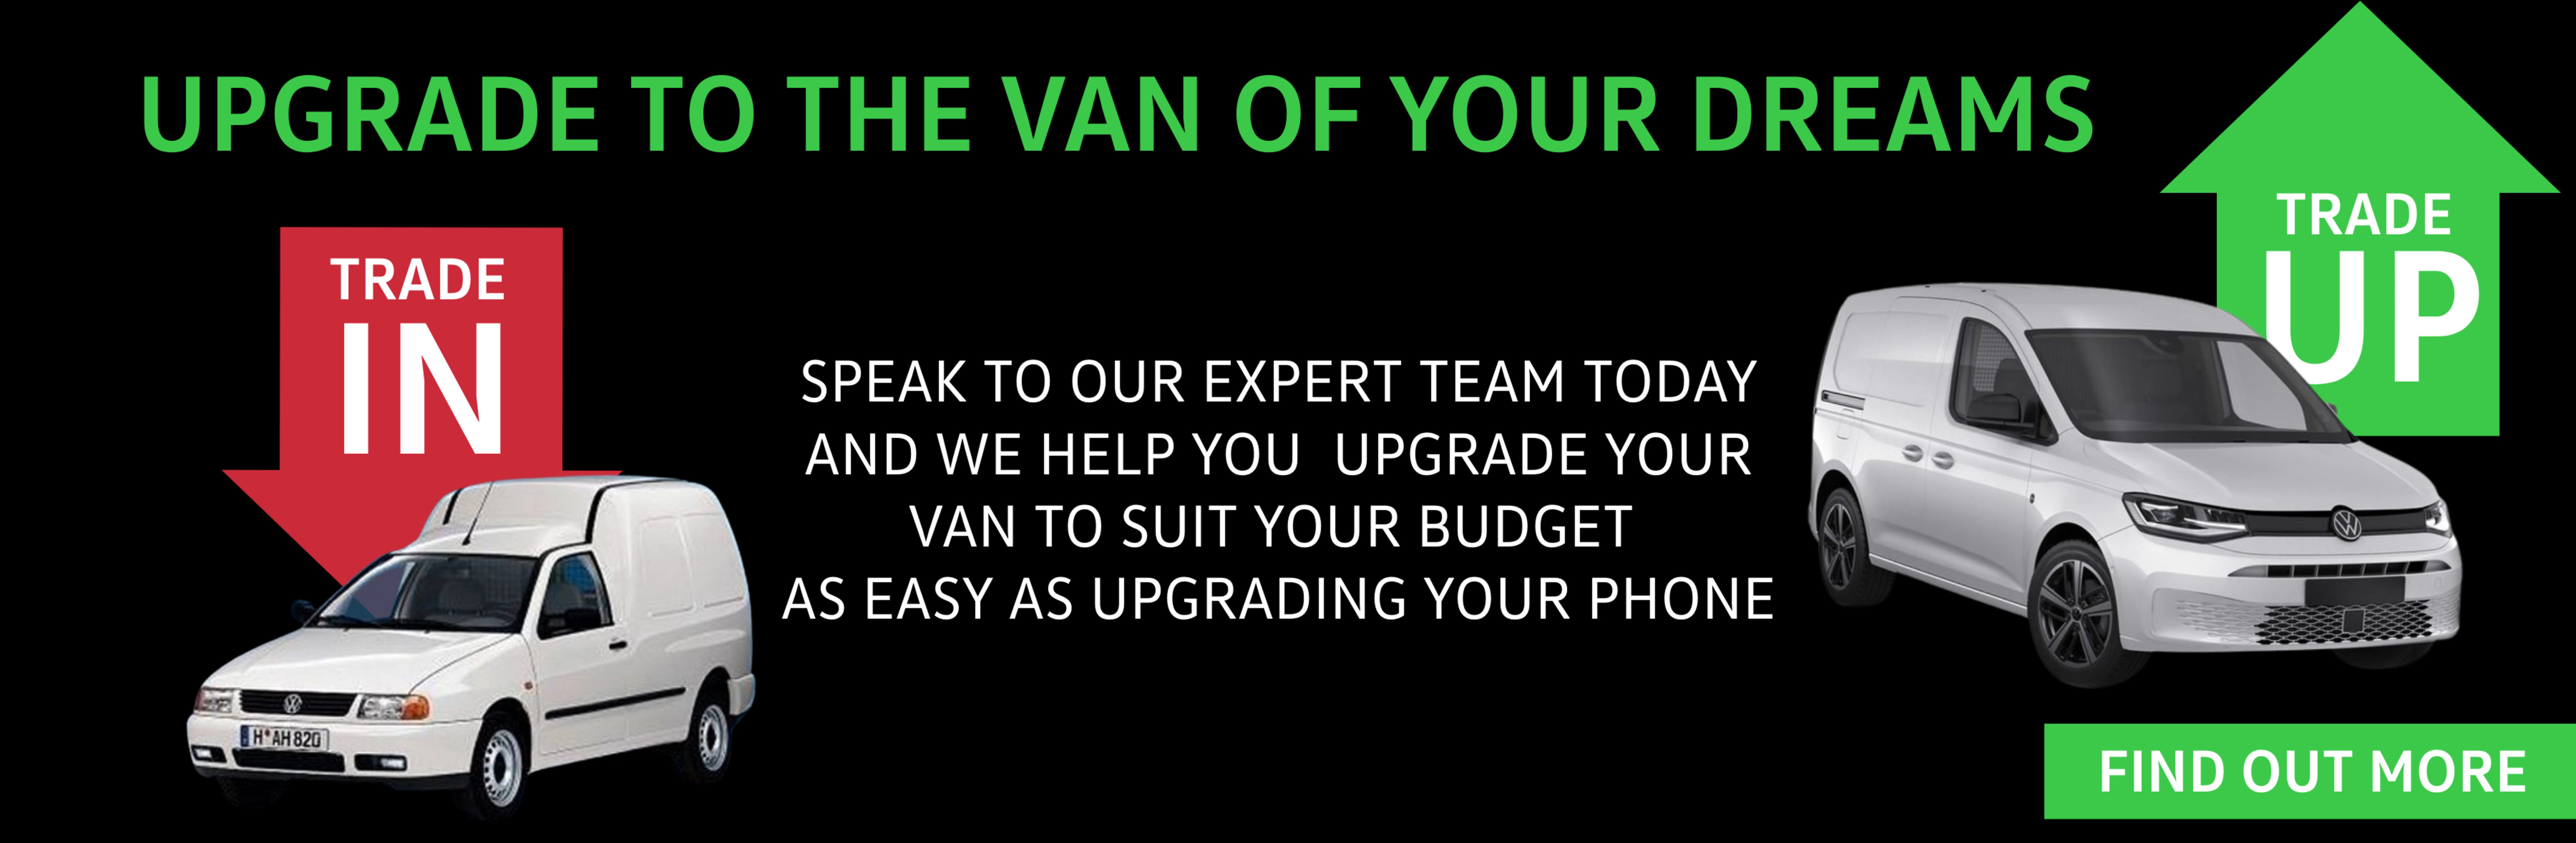 Van of Your Dreams Upgrade